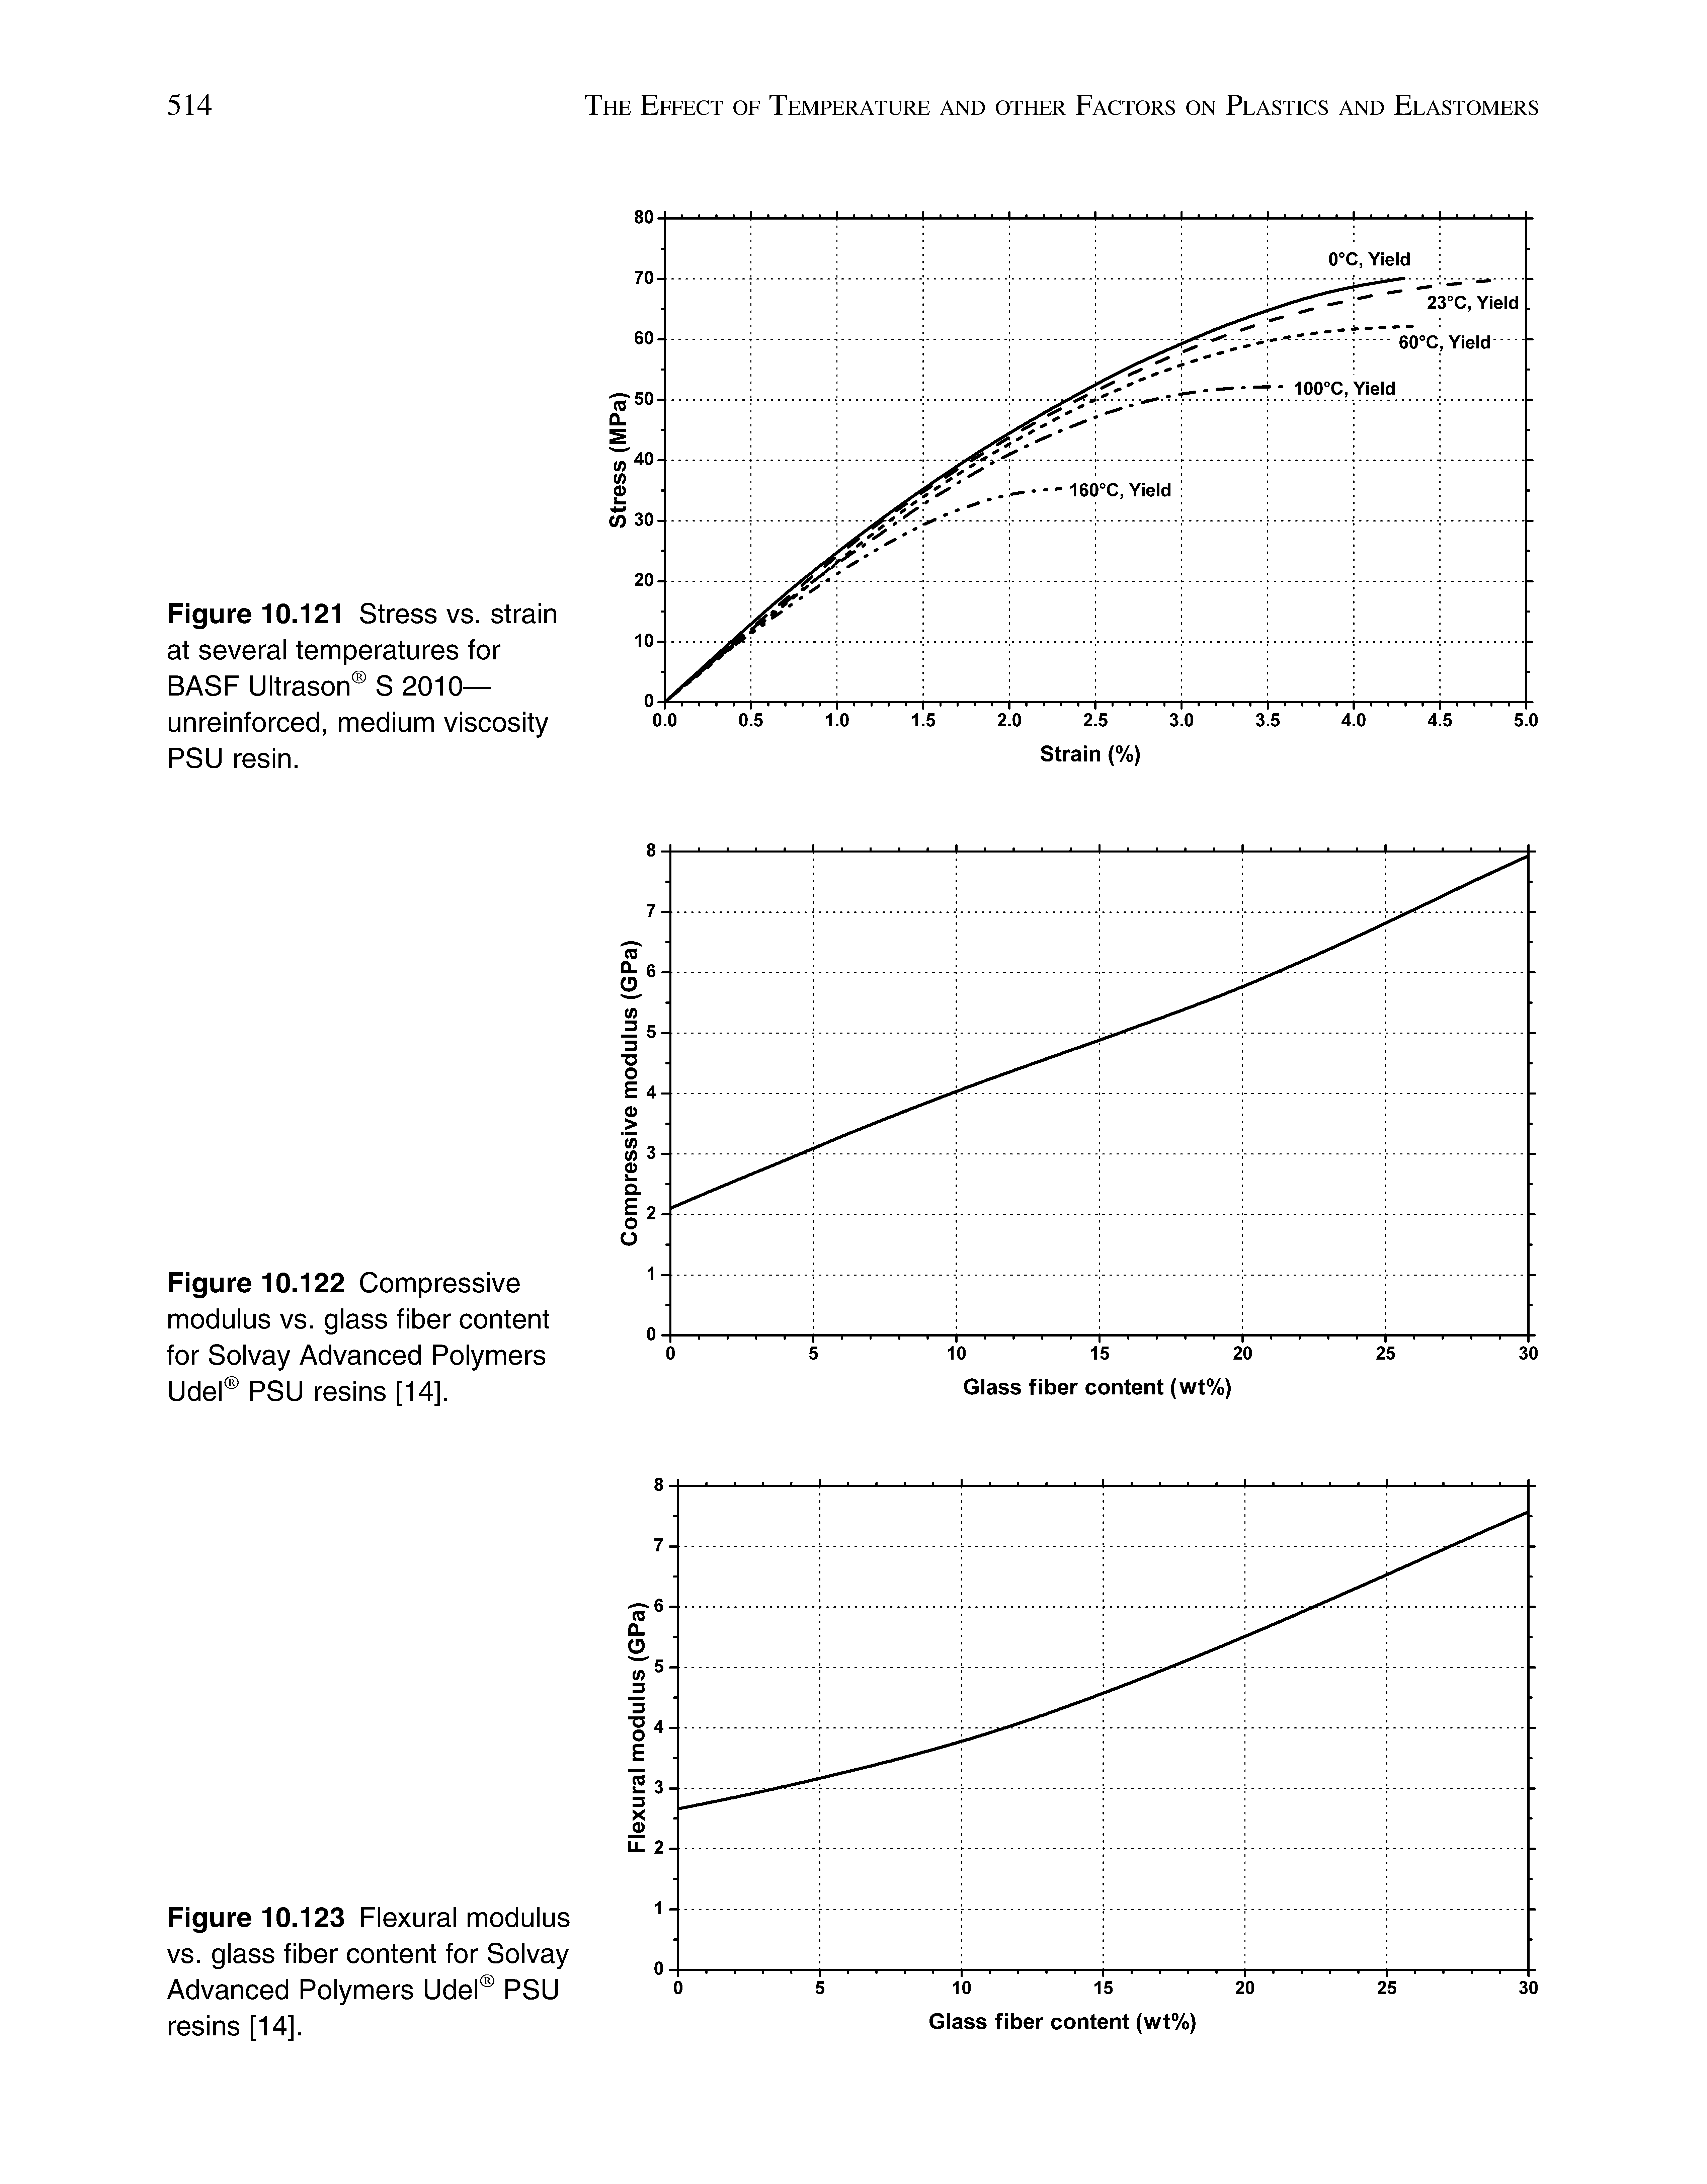 Figure 10.122 Compressive modulus vs. glass fiber content for Solvay Advanced Polymers Udel PSU resins [14].